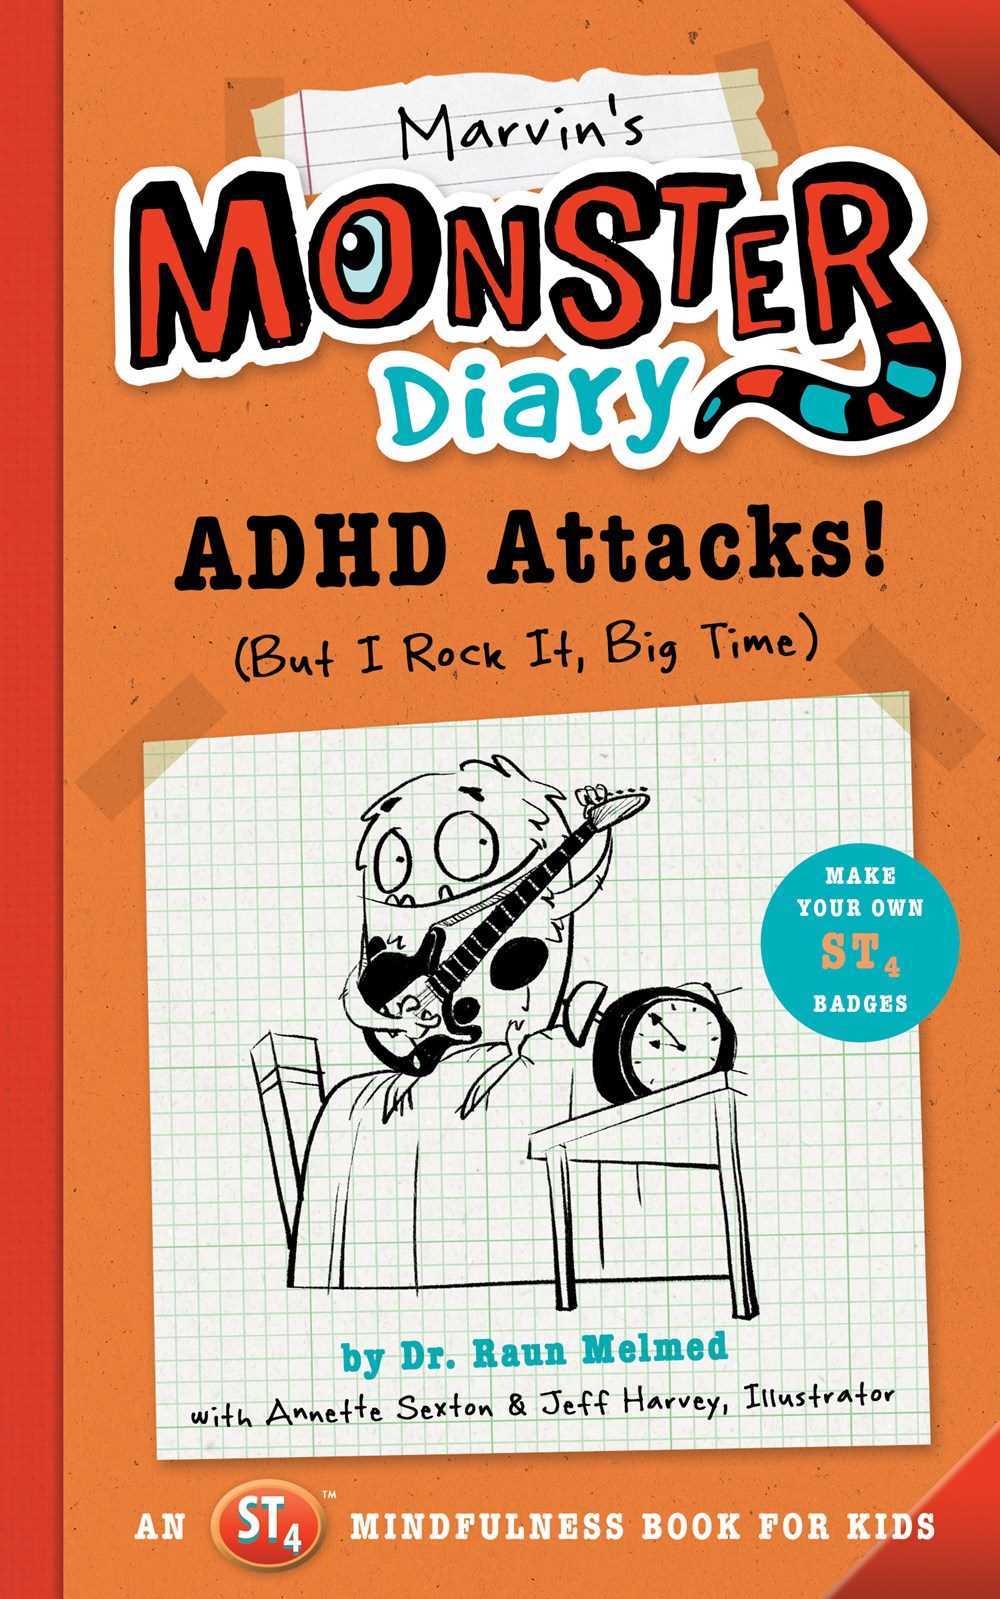 Marvin's Monster Diary